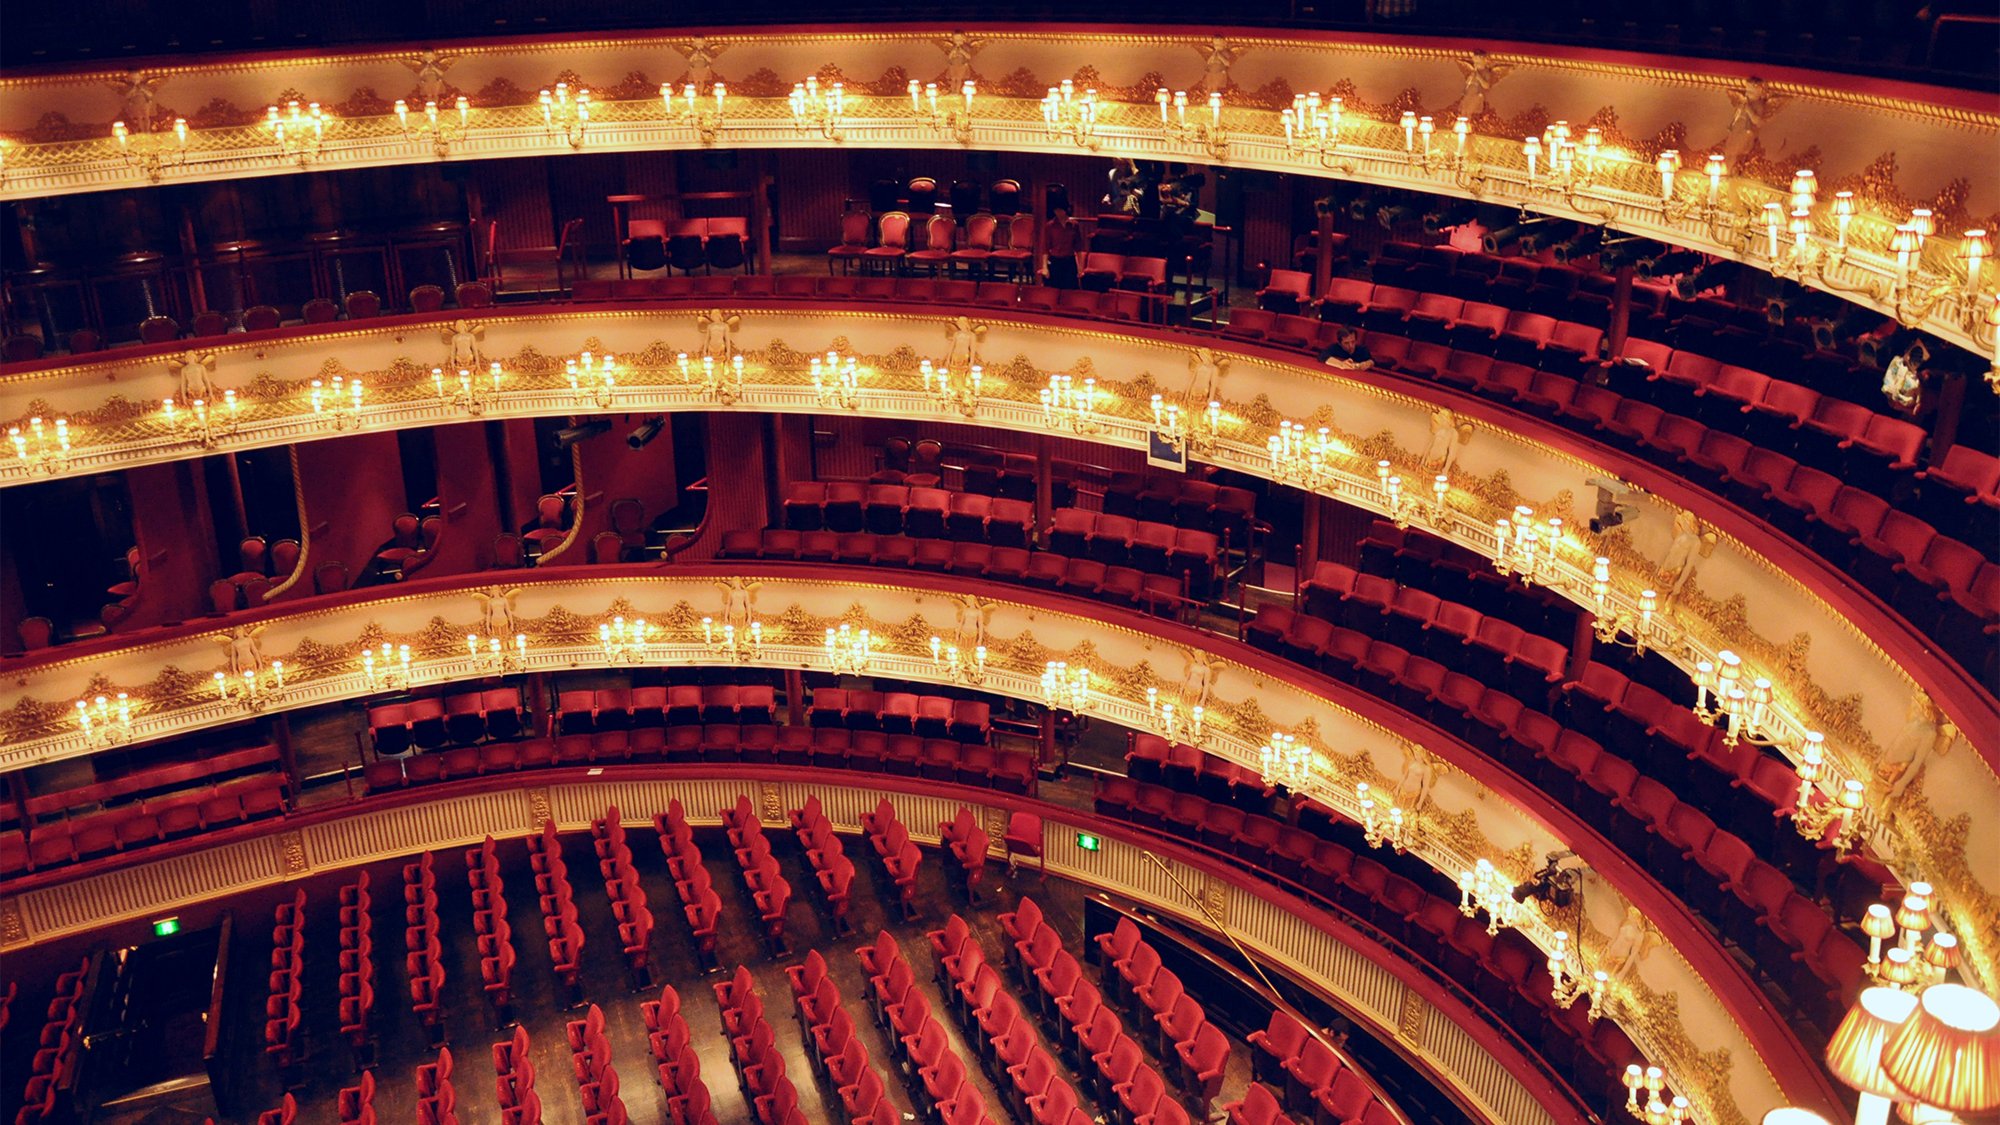 The stunning interior of the Royal Opera House auditorium.